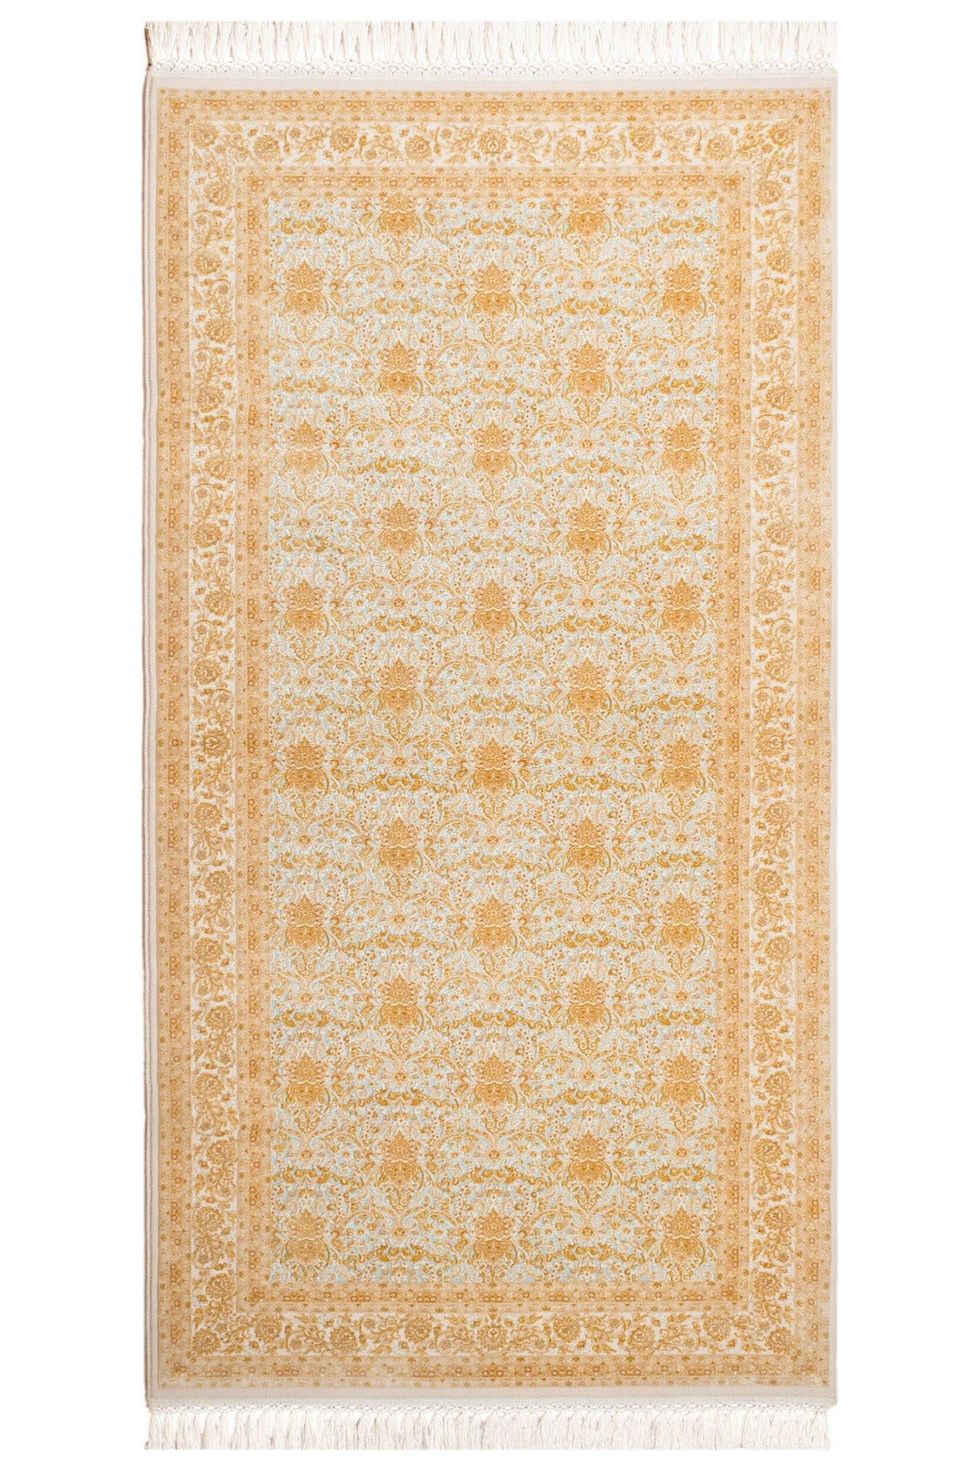 #Turkish_Carpets_Rugs# #Modern_Carpets# #Abrash_Carpets#Abrash-18005283-200x100